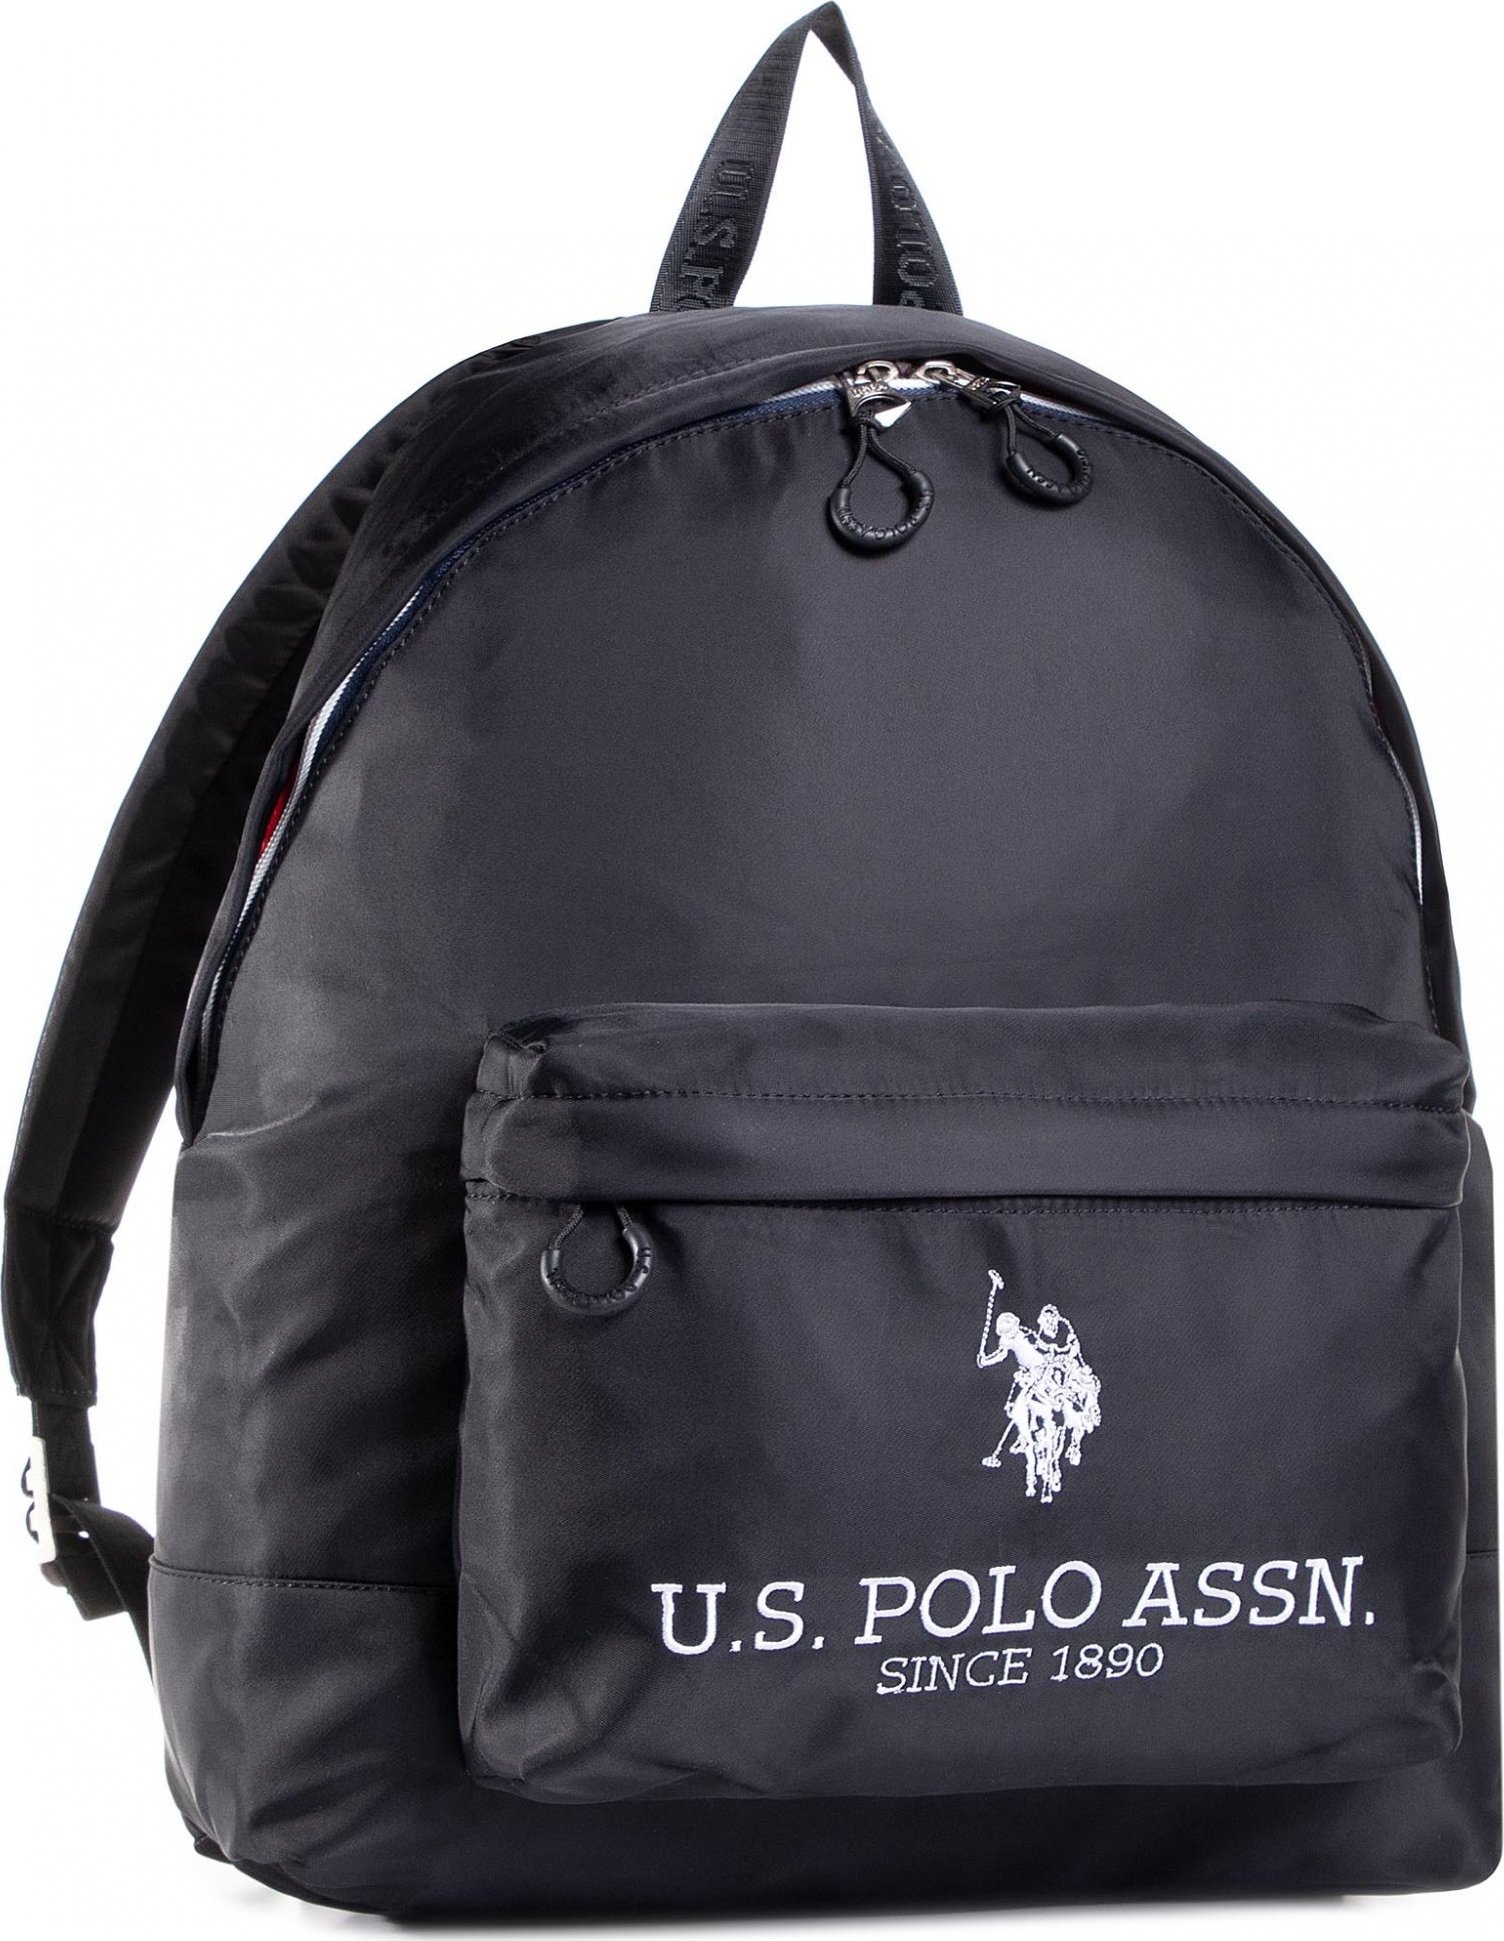 U.S. Polo Assn. New Bump Backpack Bag BIUNB4855MIA/005